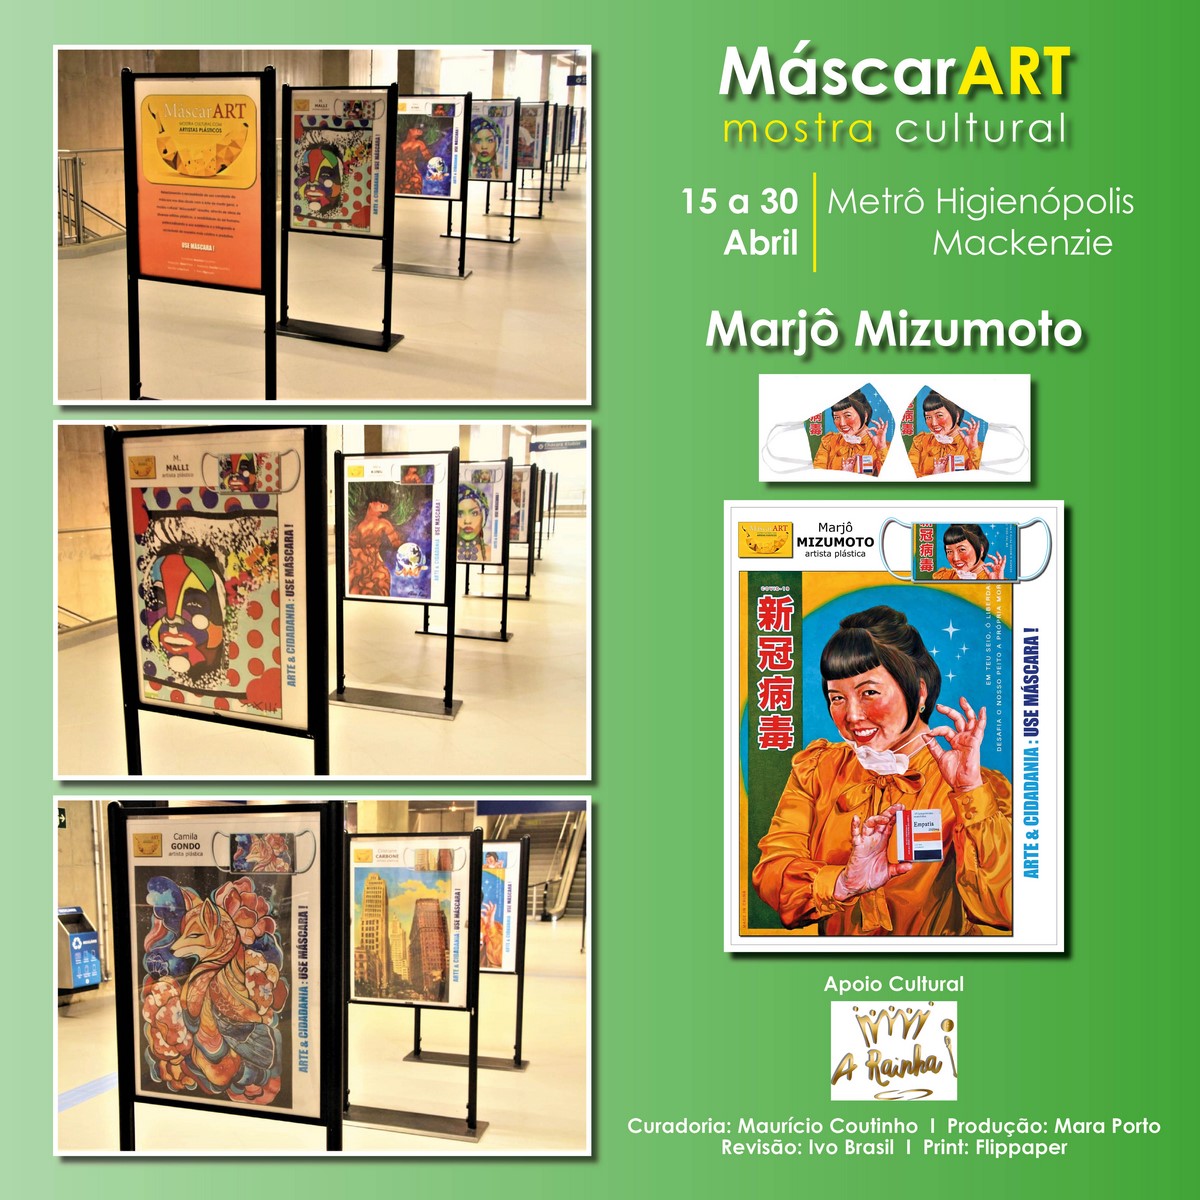 Exhibition "MascarART". Disclosure.